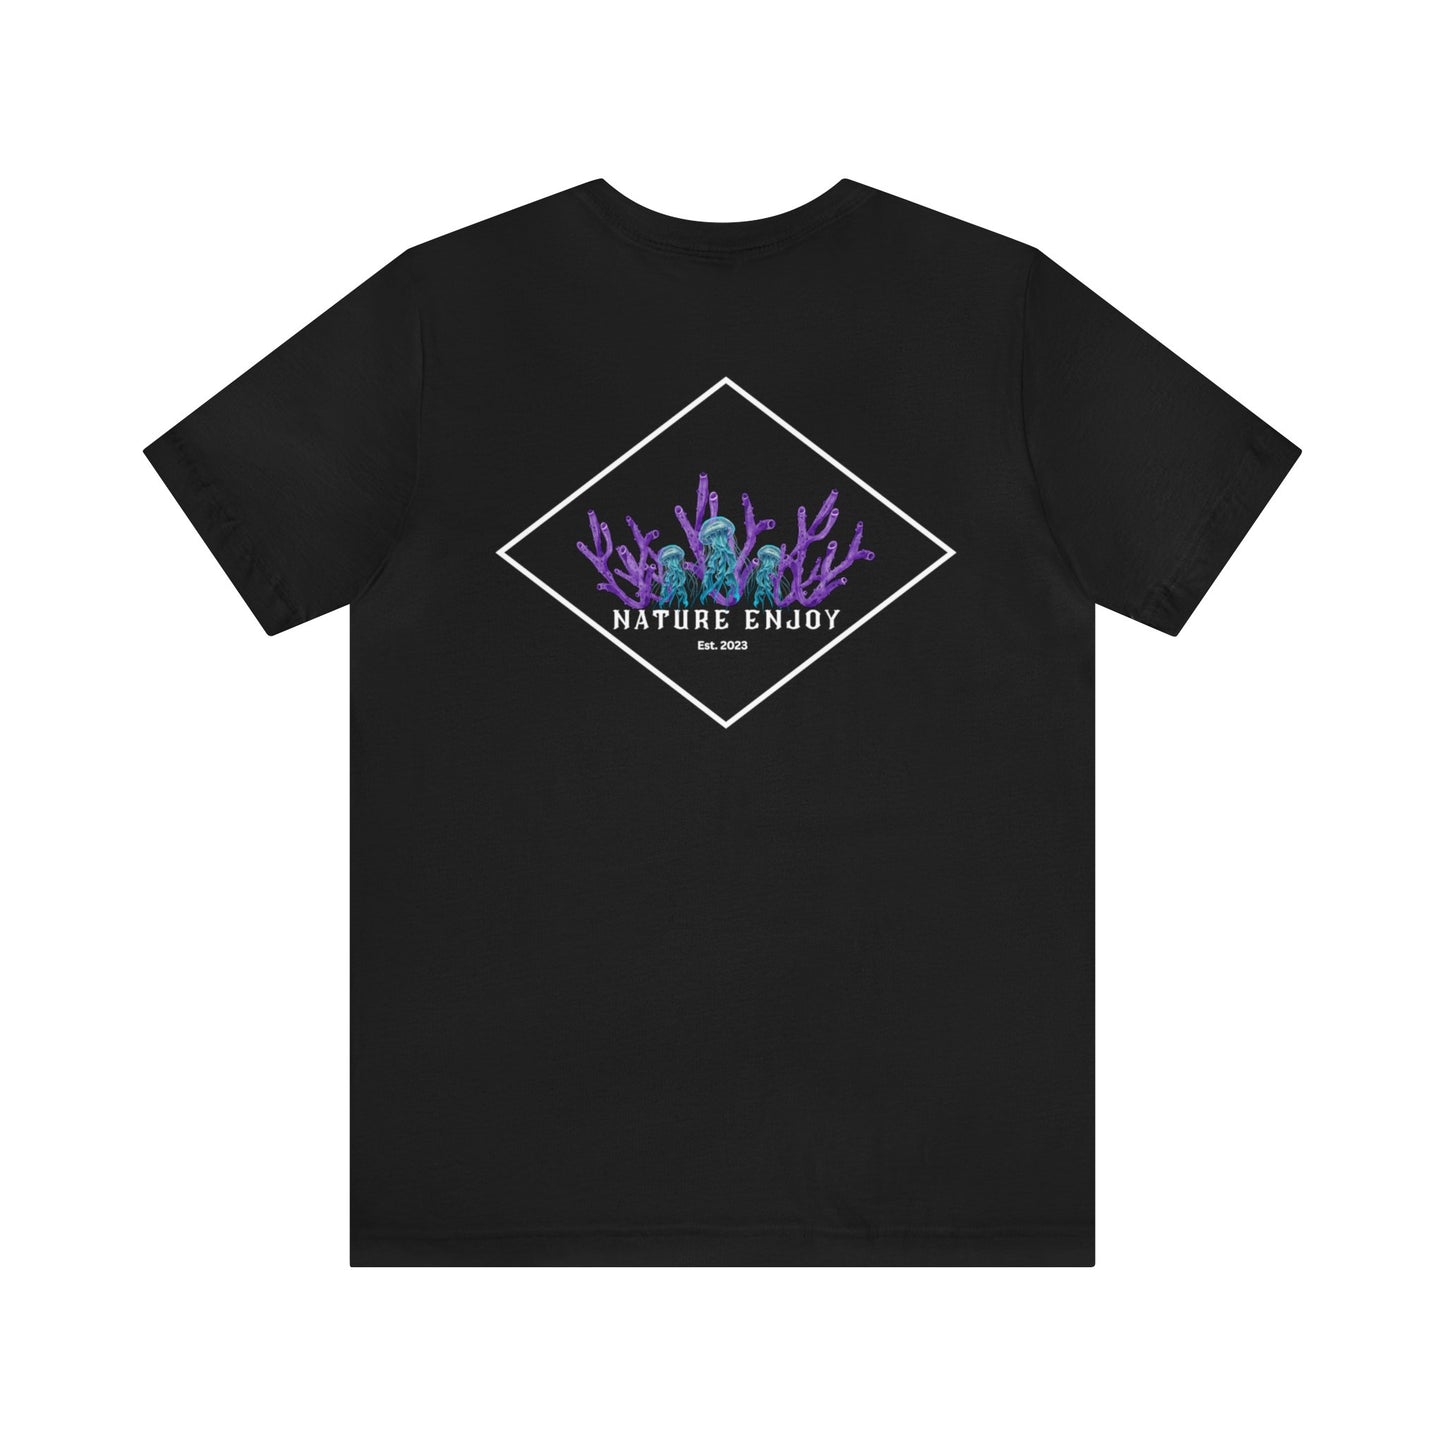 Deep Sea Jellyfish T-Shirt